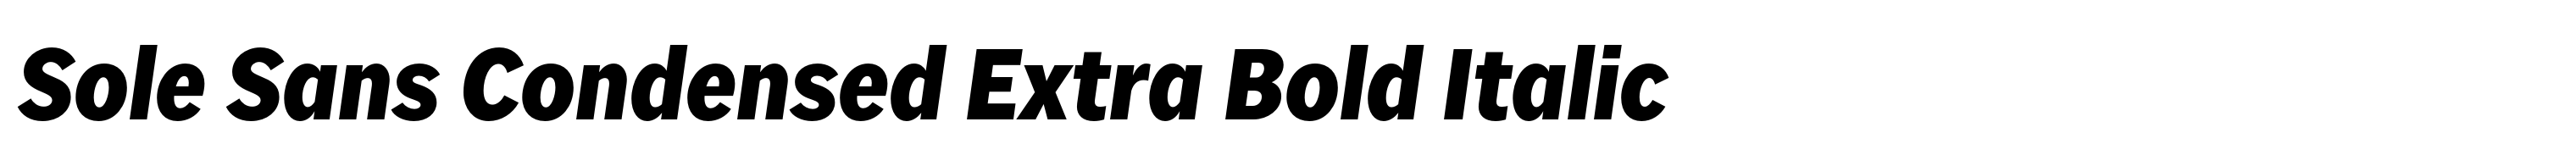 Sole Sans Condensed Extra Bold Italic